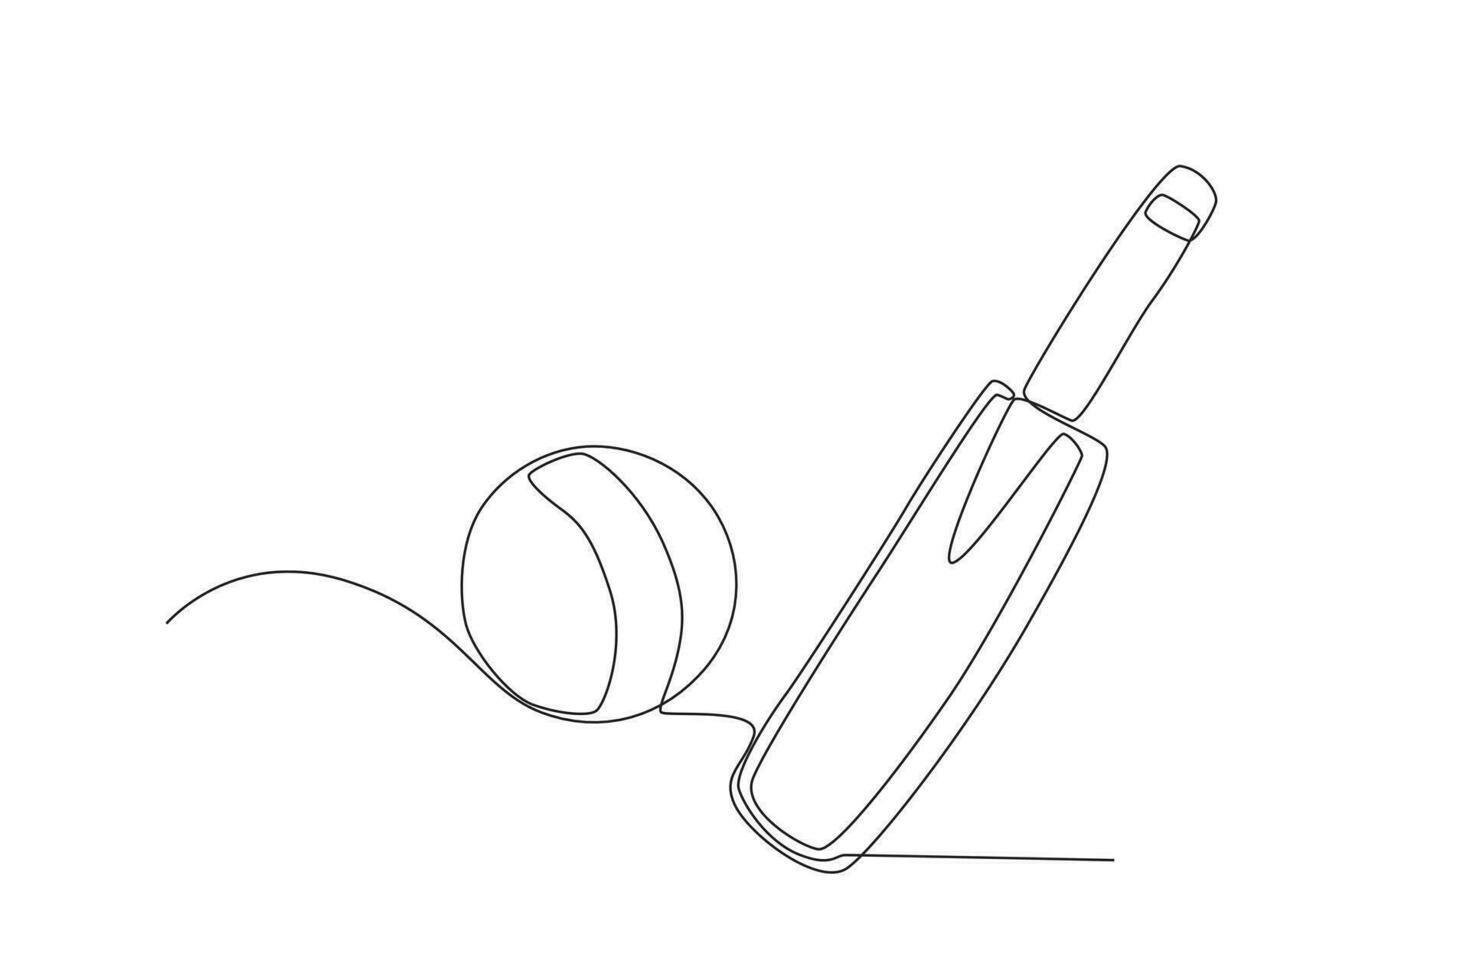 A cricket bat and ball vector